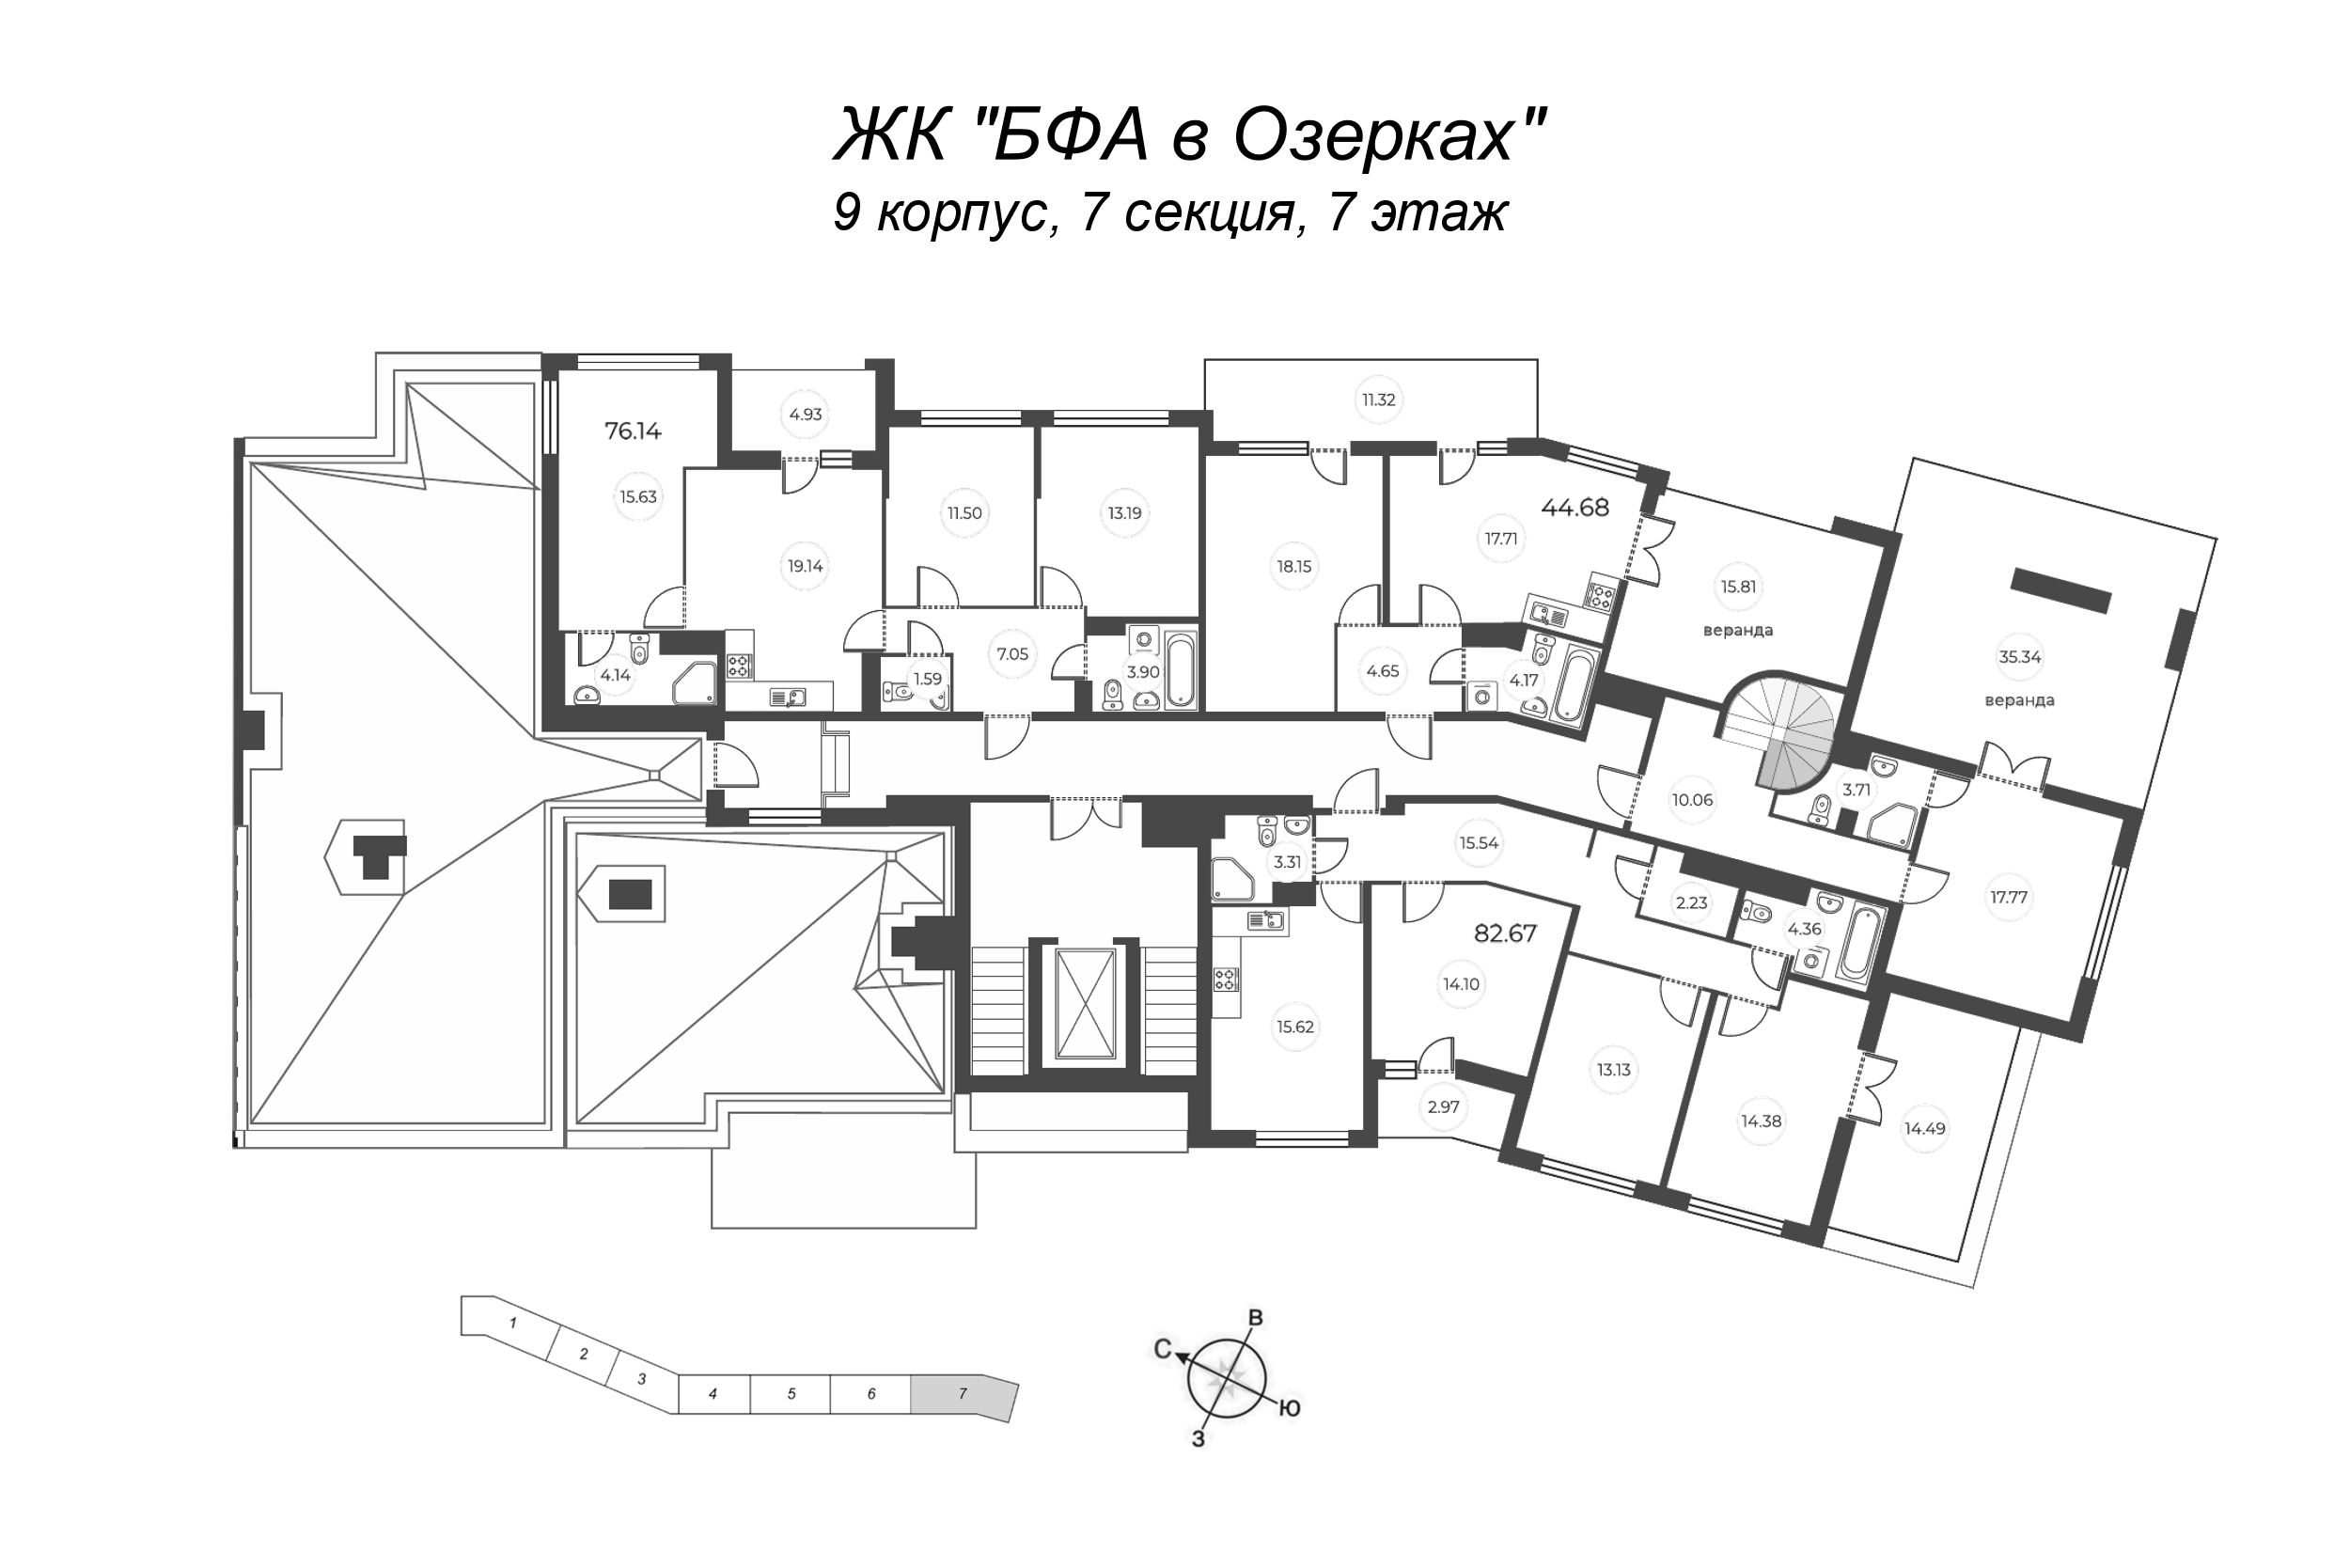 4-комнатная (Евро) квартира, 88.51 м² в ЖК "БФА в Озерках" - планировка этажа